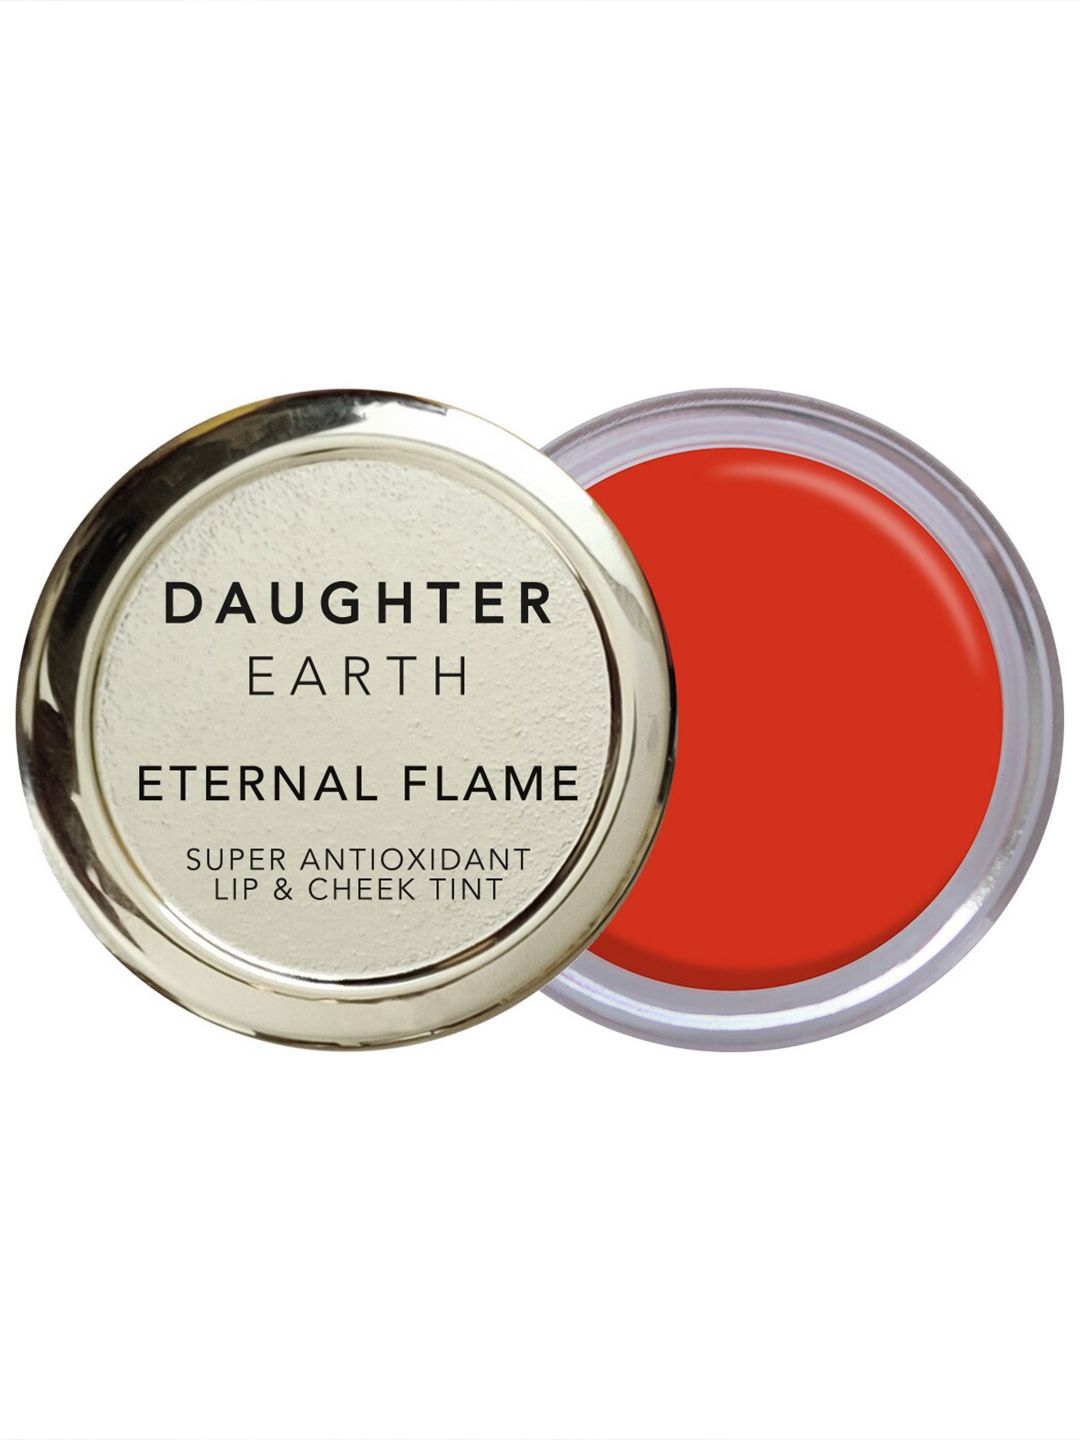 DAUGHTER EARTH Super Antioxidant Lip & Cheek Tint -Eternal Flame Price in India